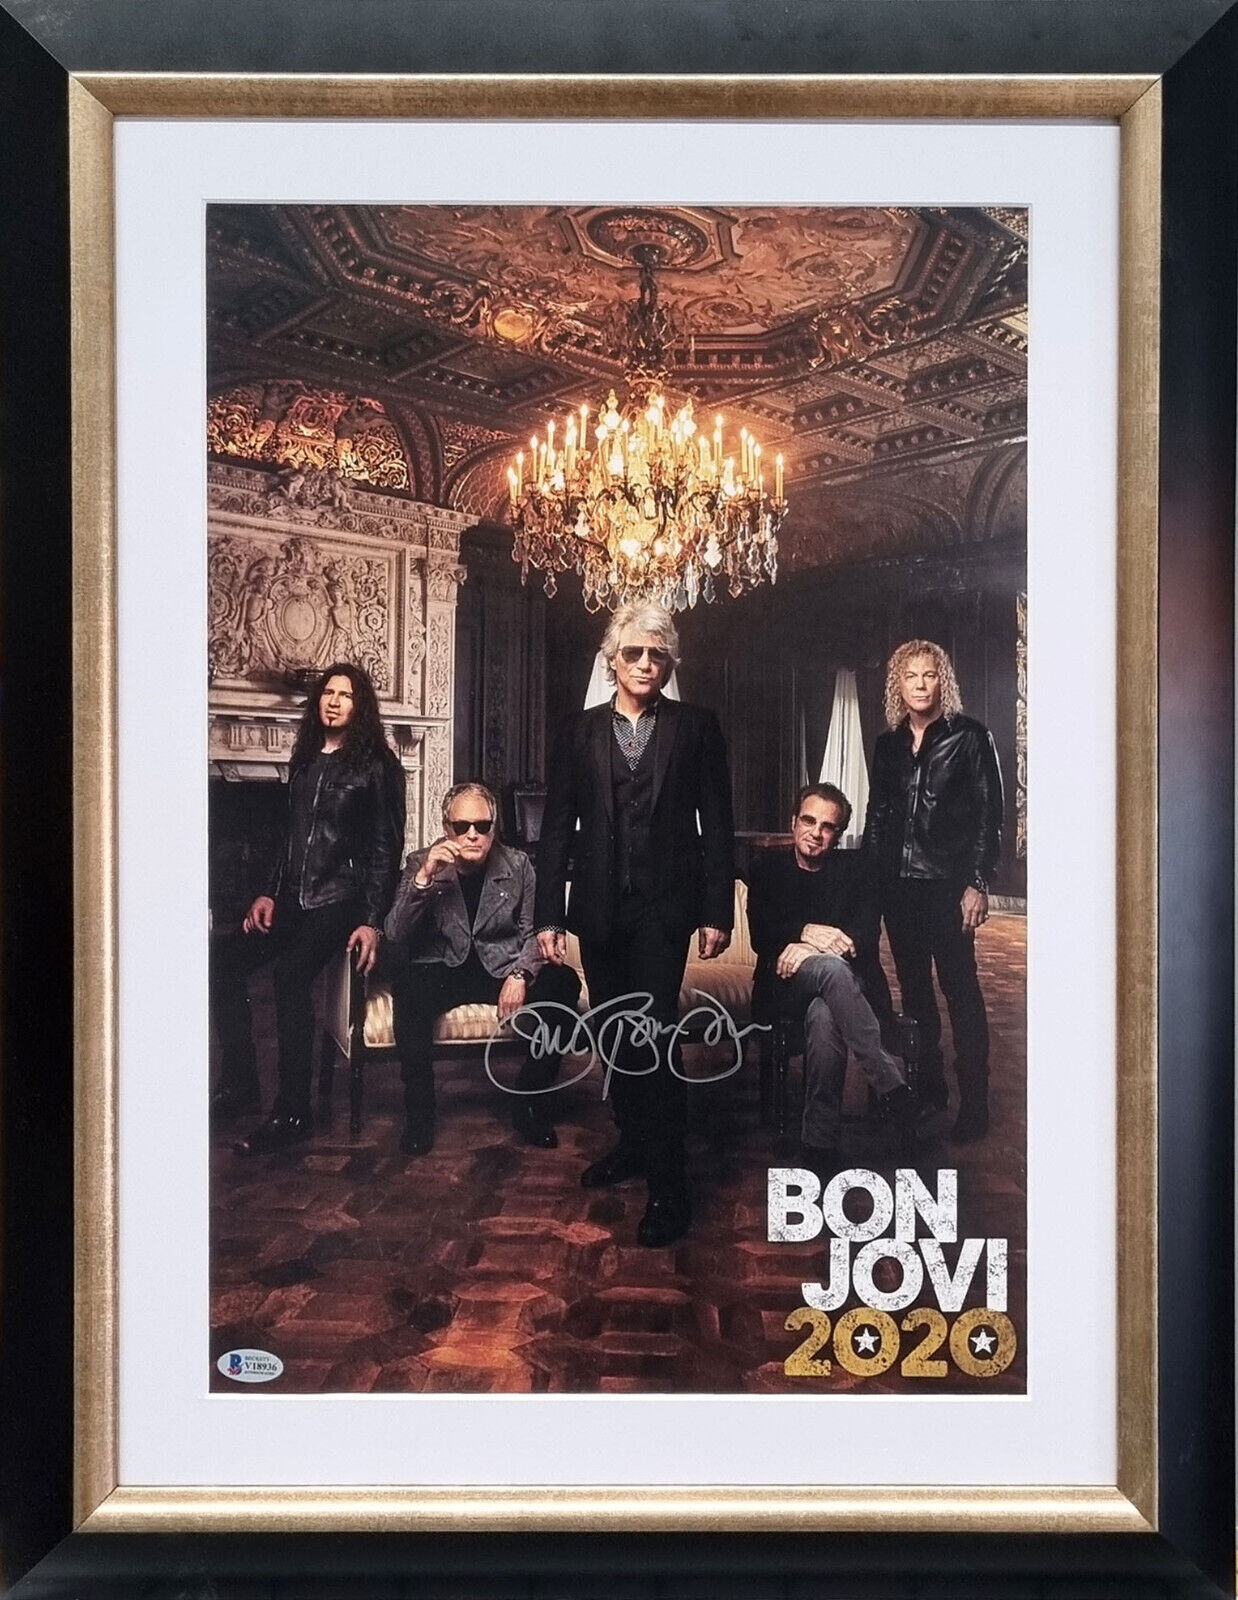 Jon Bon Jovi Signed & Framed 16x20 inch Photograph (Beckett V18936)